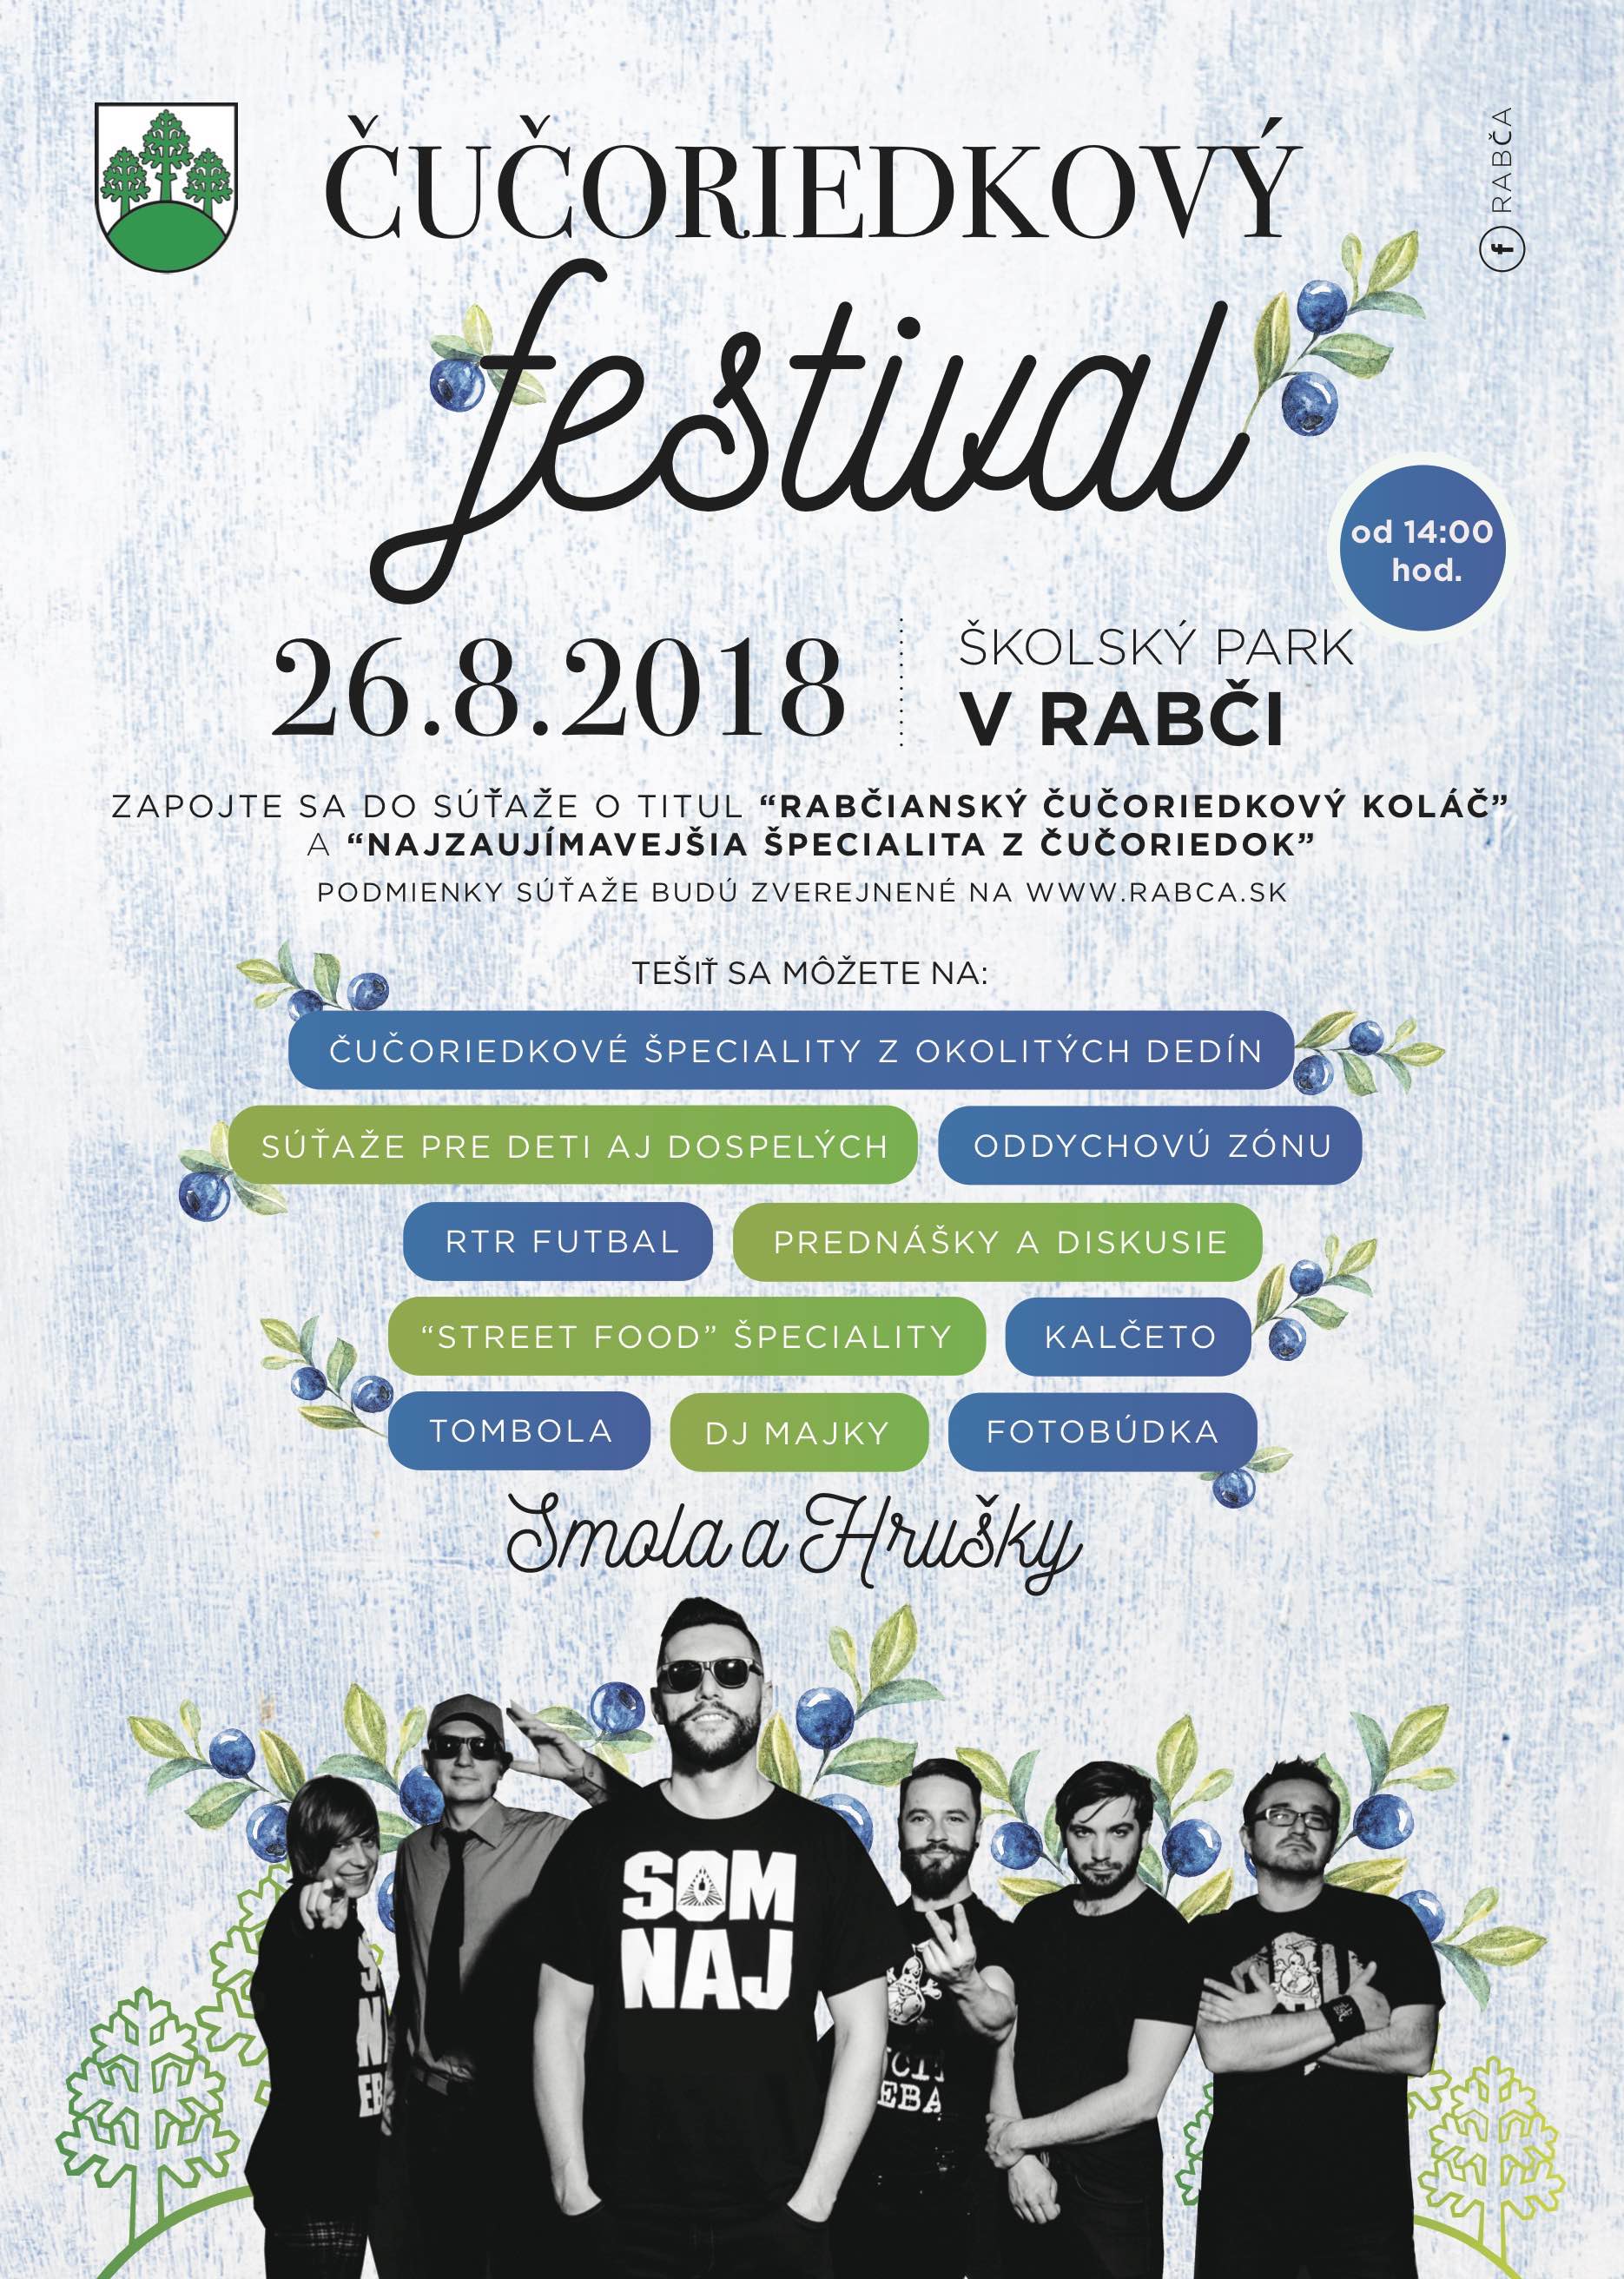 uoriedkov festival v Rabi 2018 - 1. ronk